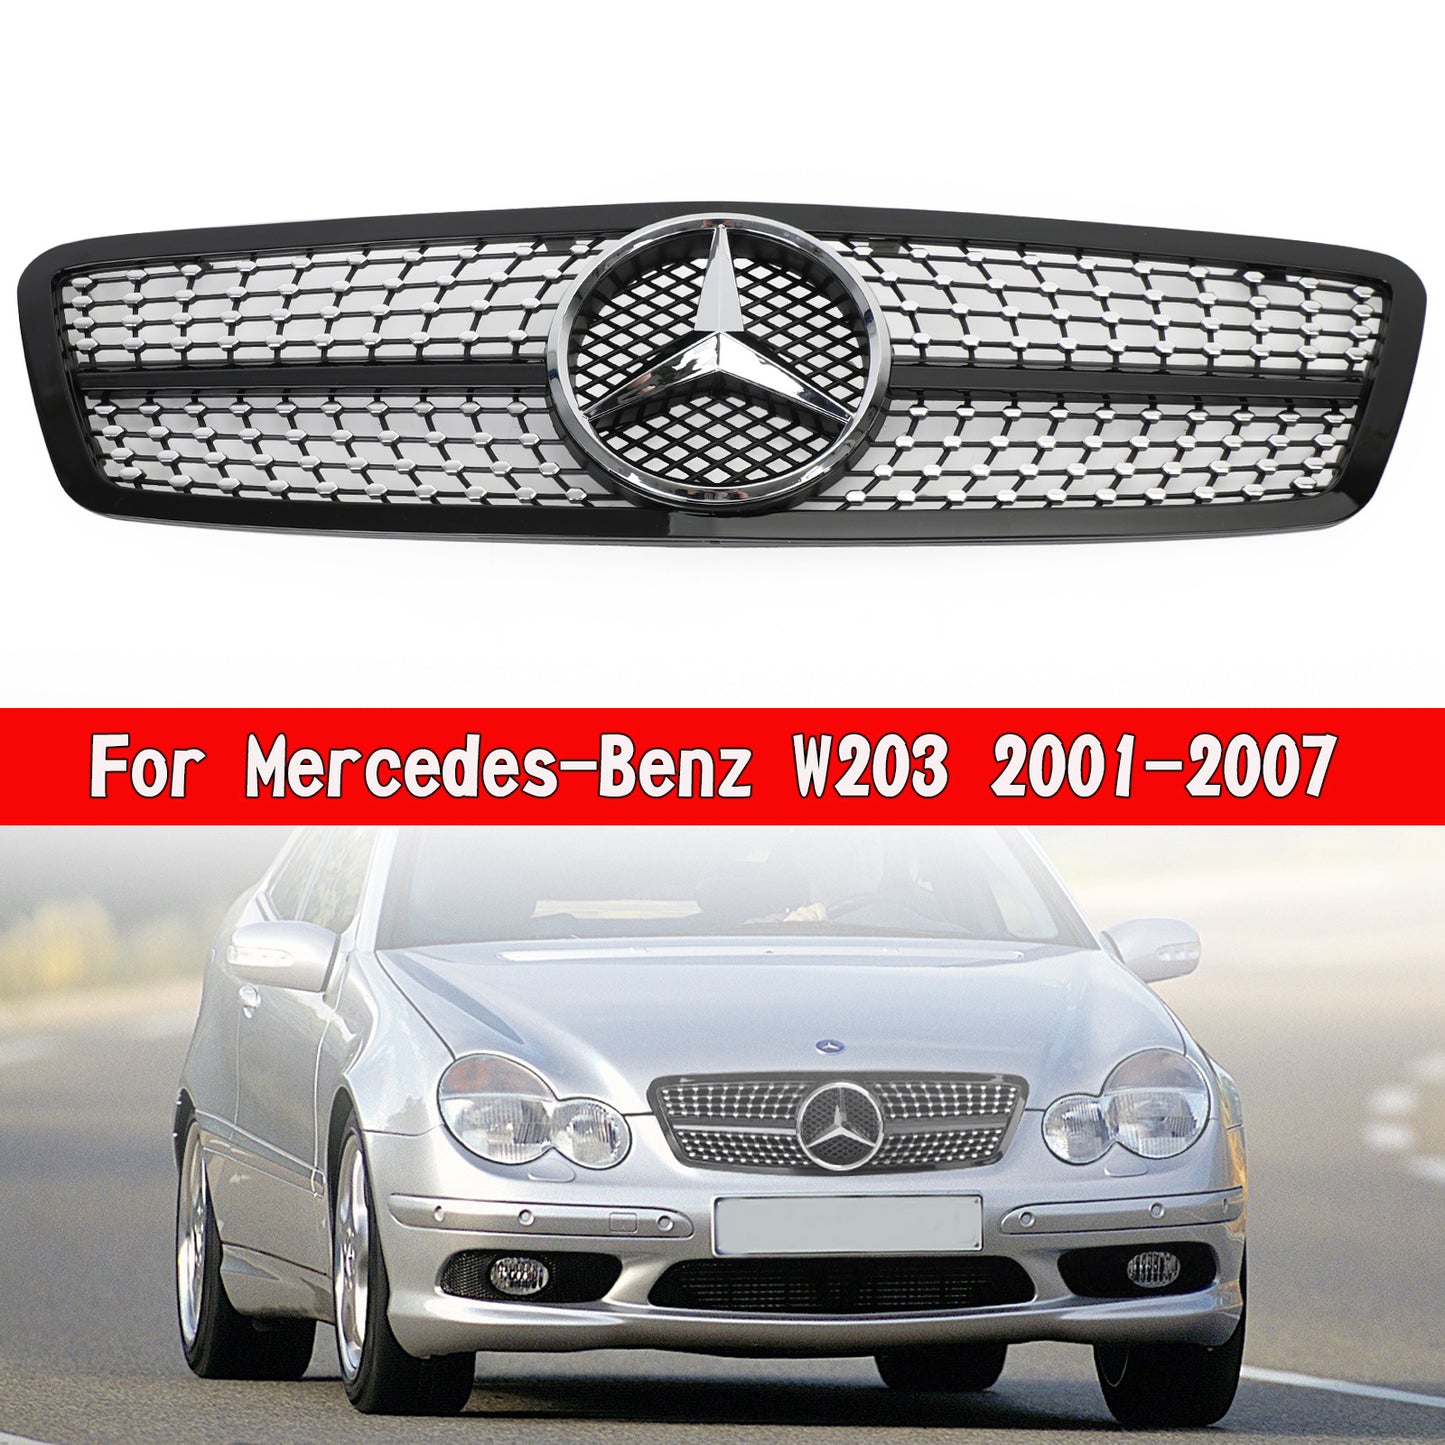 2001-2007 Mercedes-Benz W203 C230 C320 C240 Grille Black Diamond C63 AMG Style